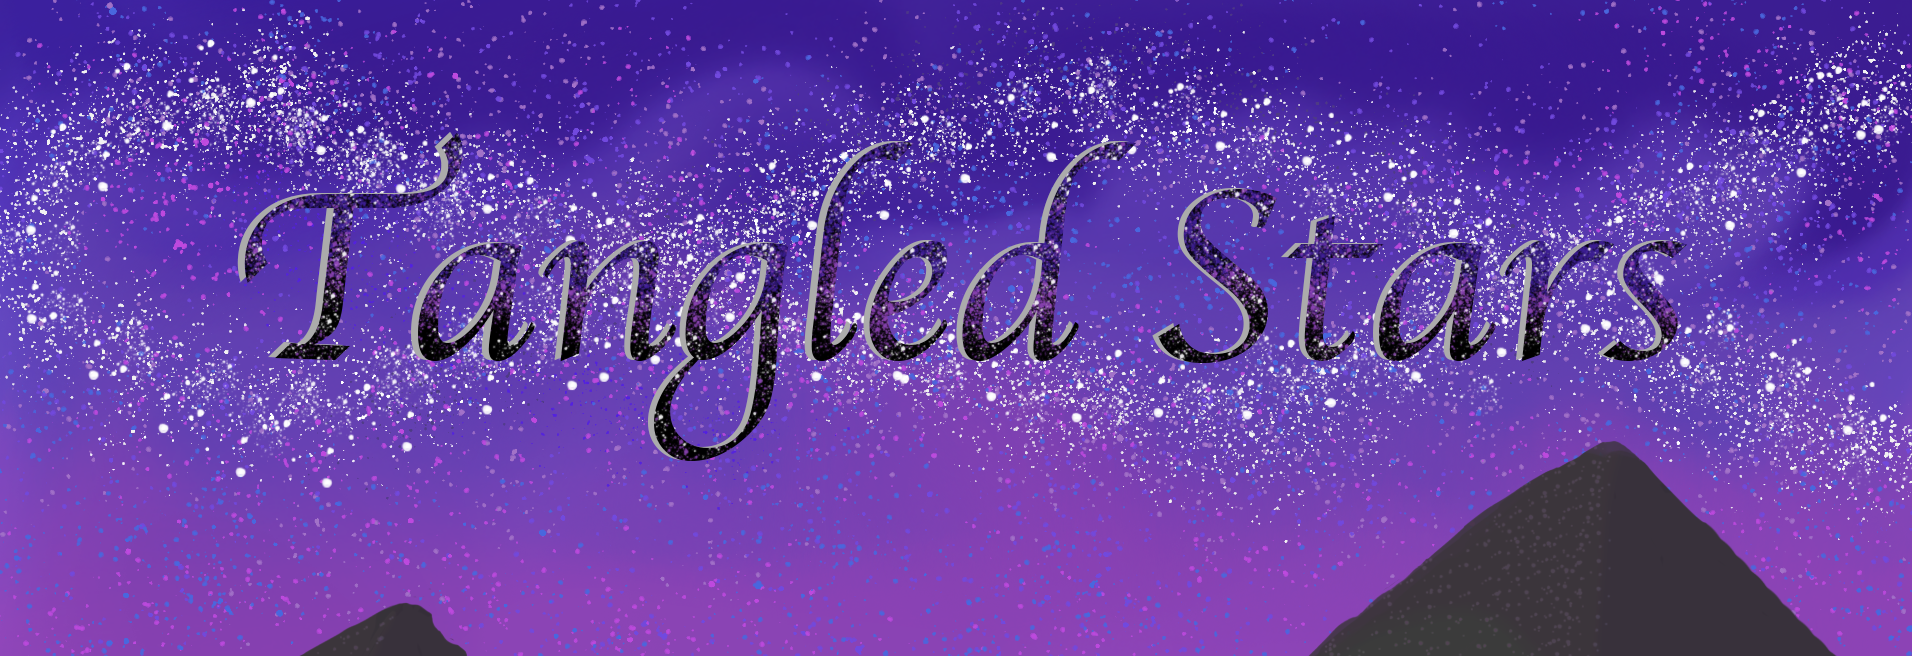 Tangled Stars